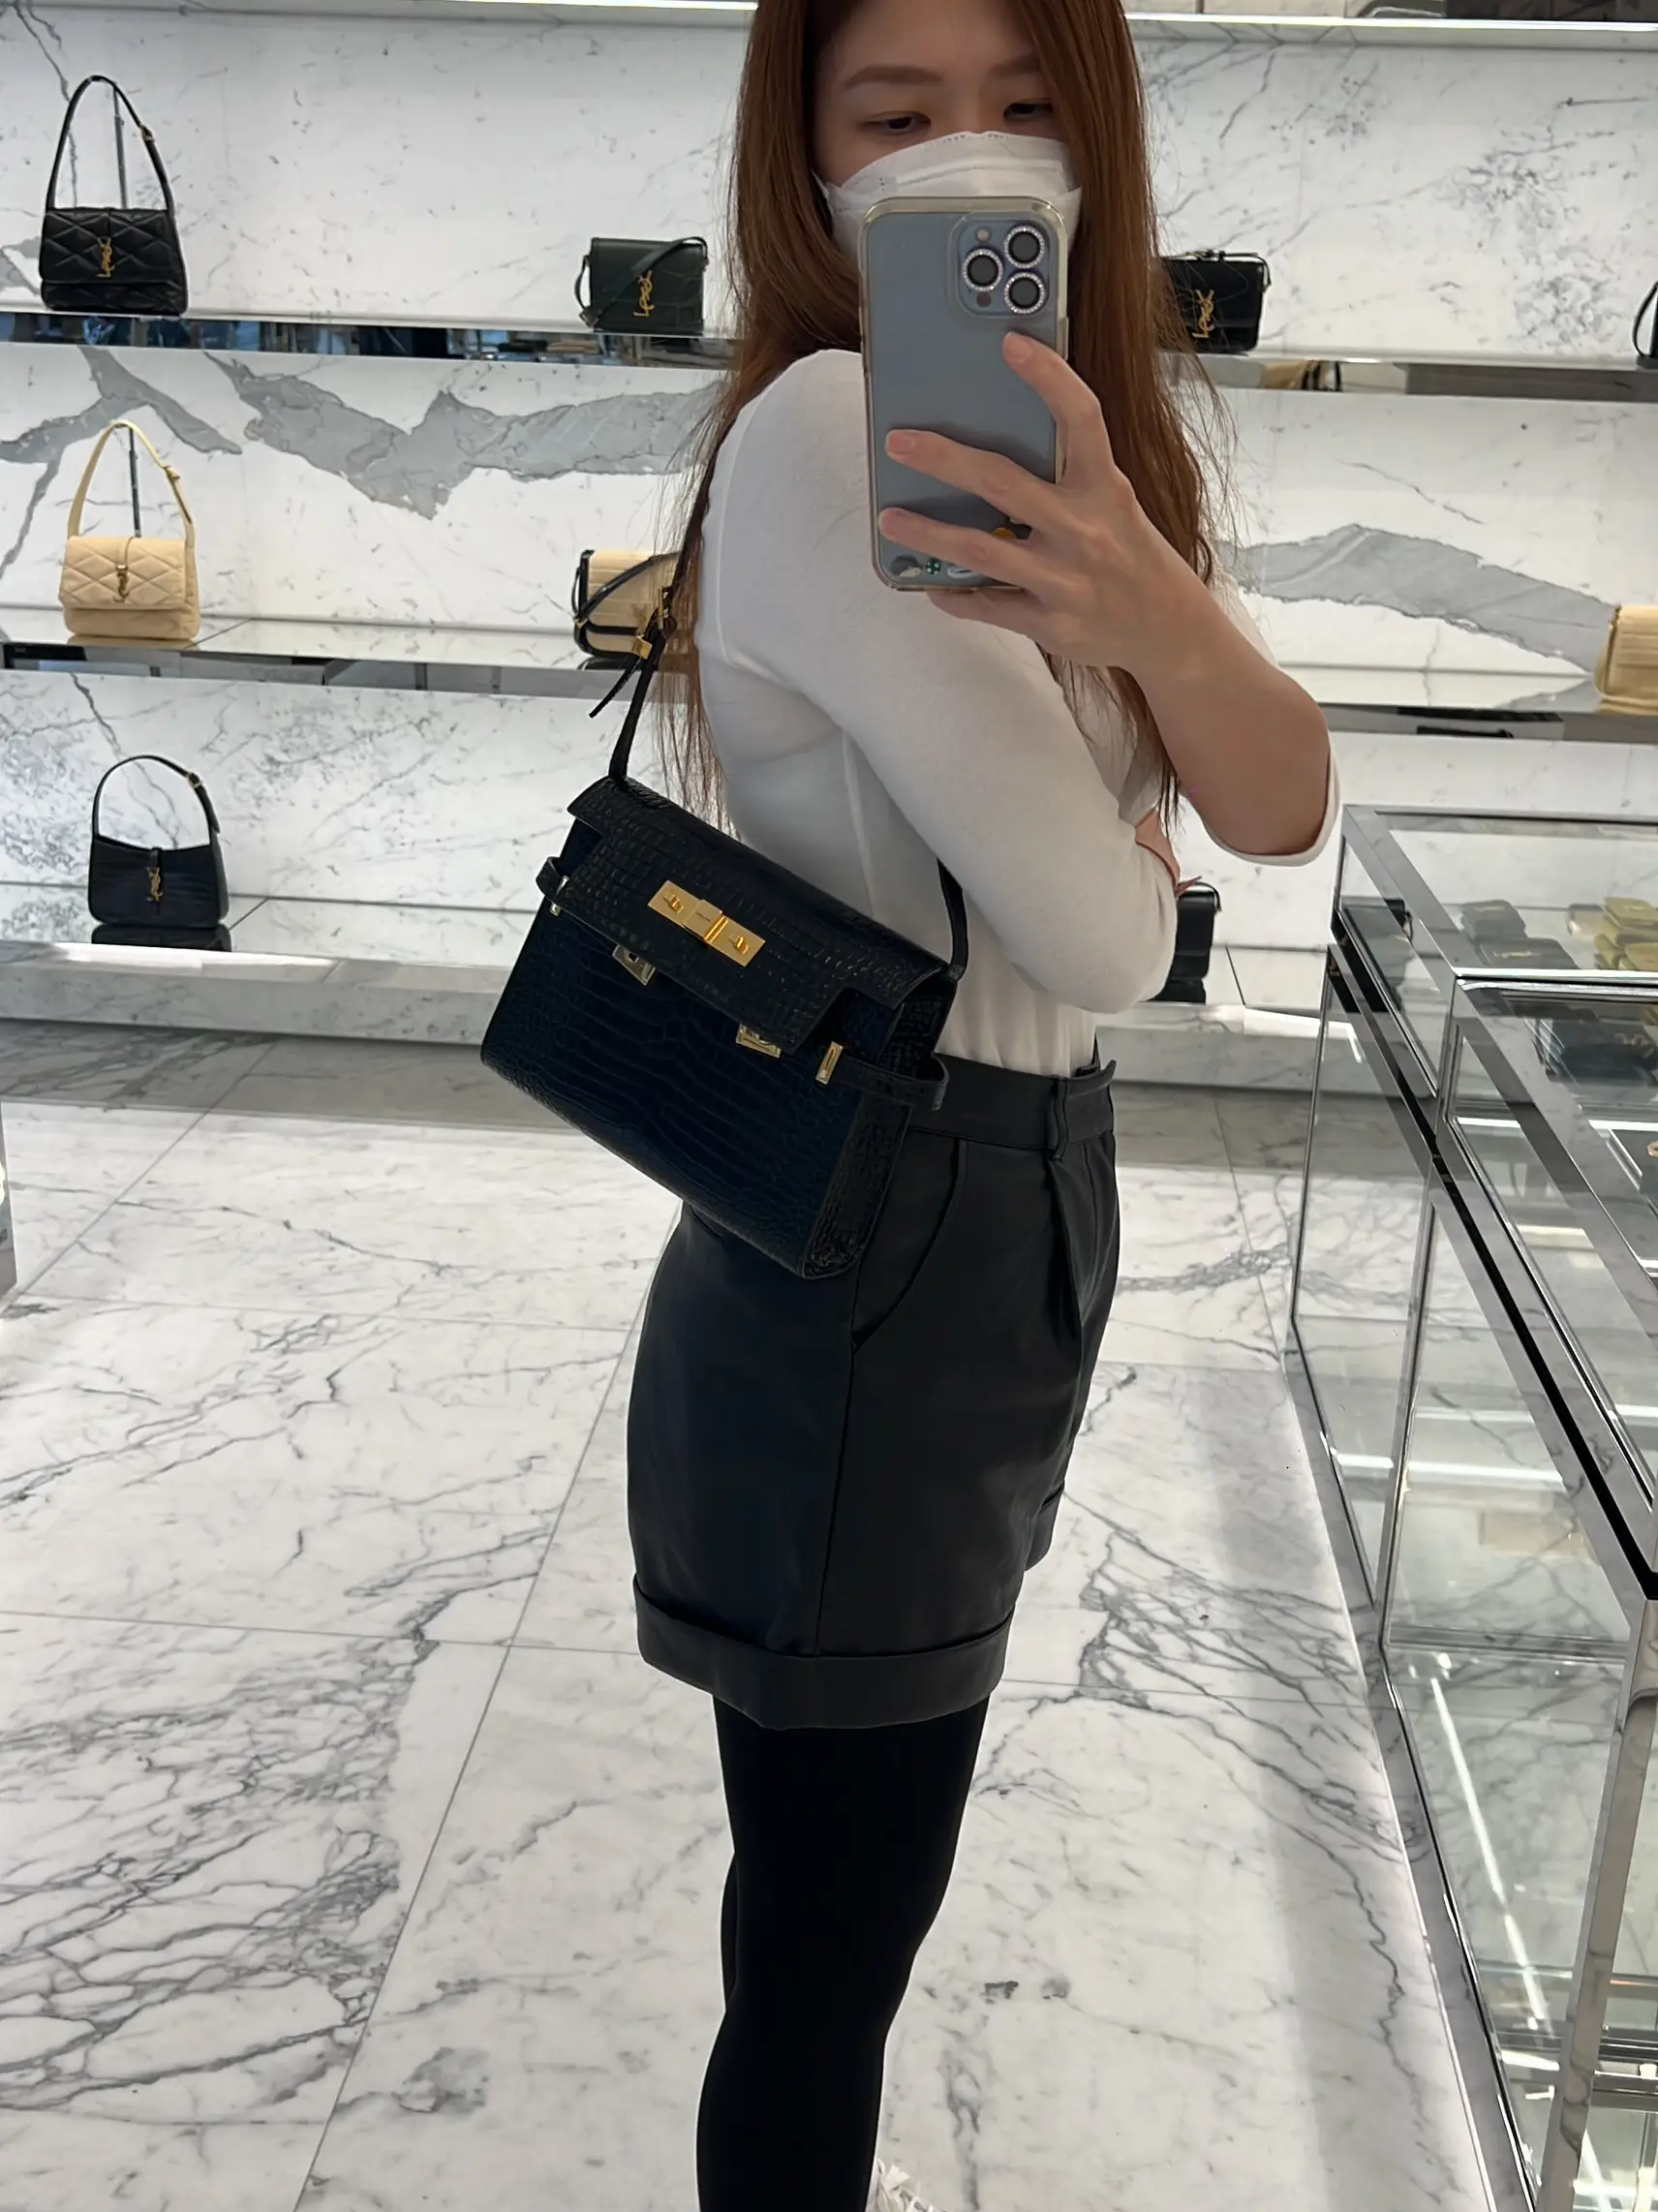 NO F*AKE BAGS ALLOWED 🚫 #luxury #handbag #monaco #saintlaurent